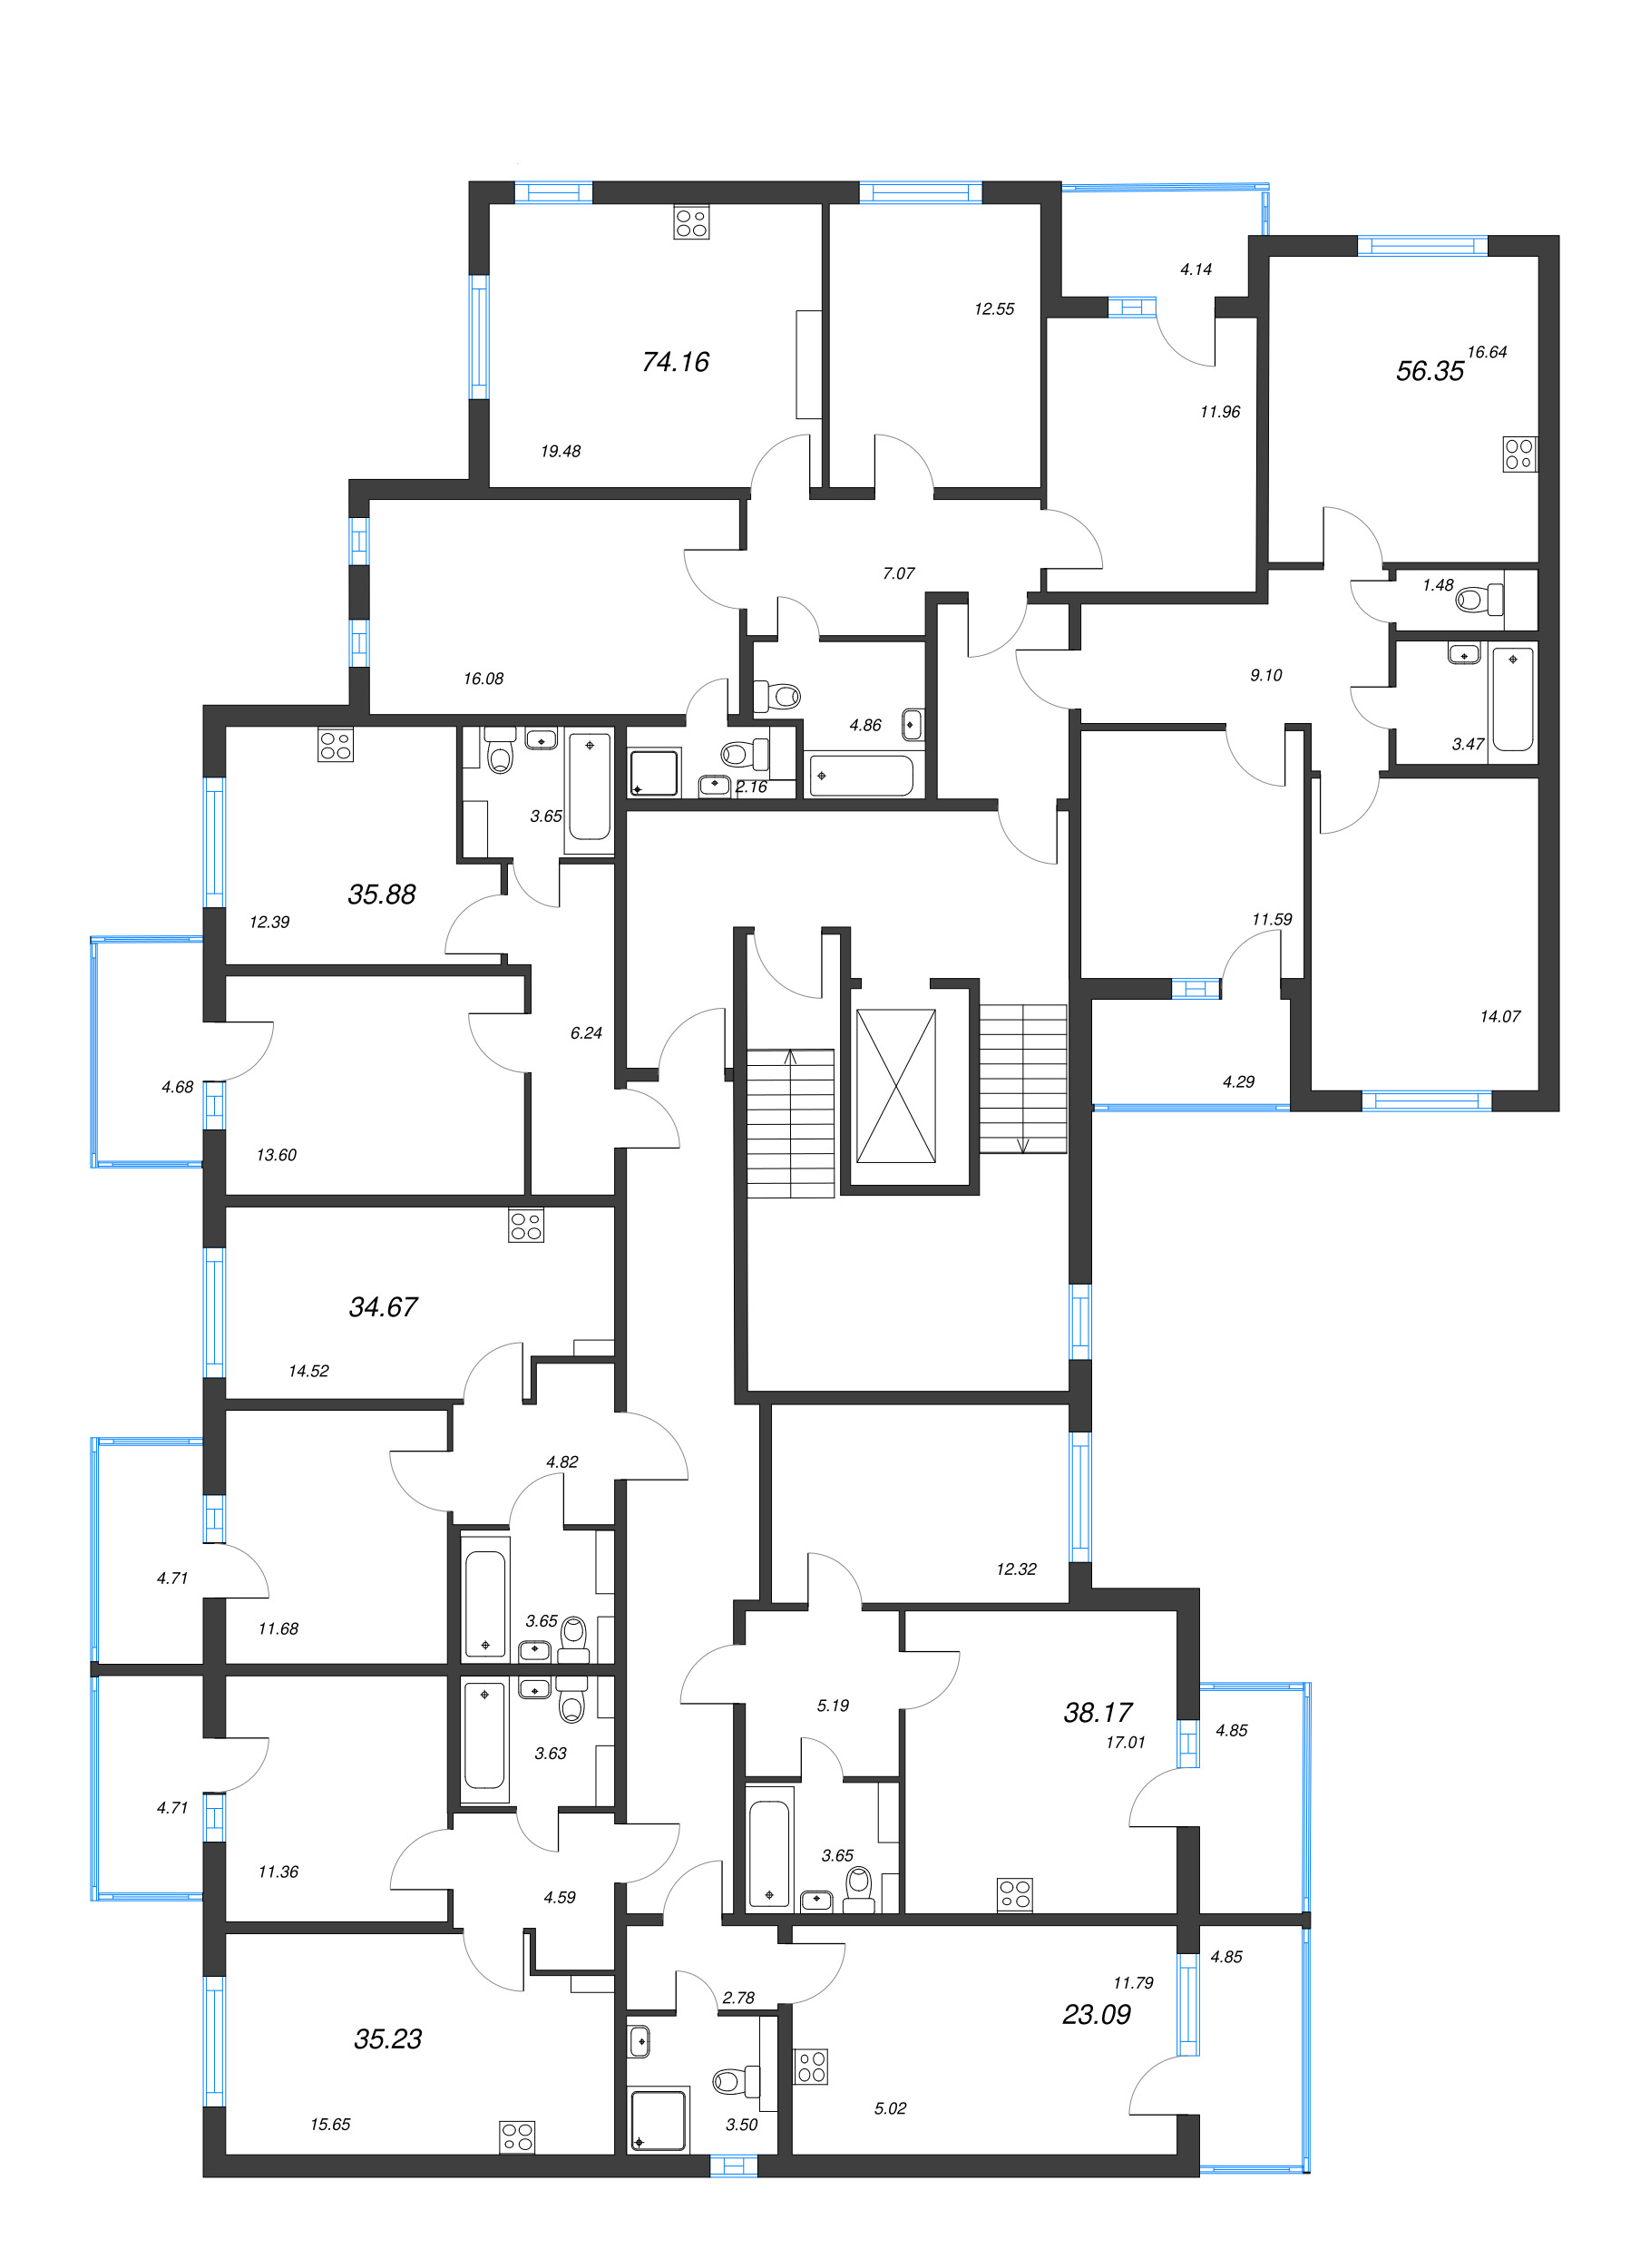 2-комнатная (Евро) квартира, 35.23 м² - планировка этажа